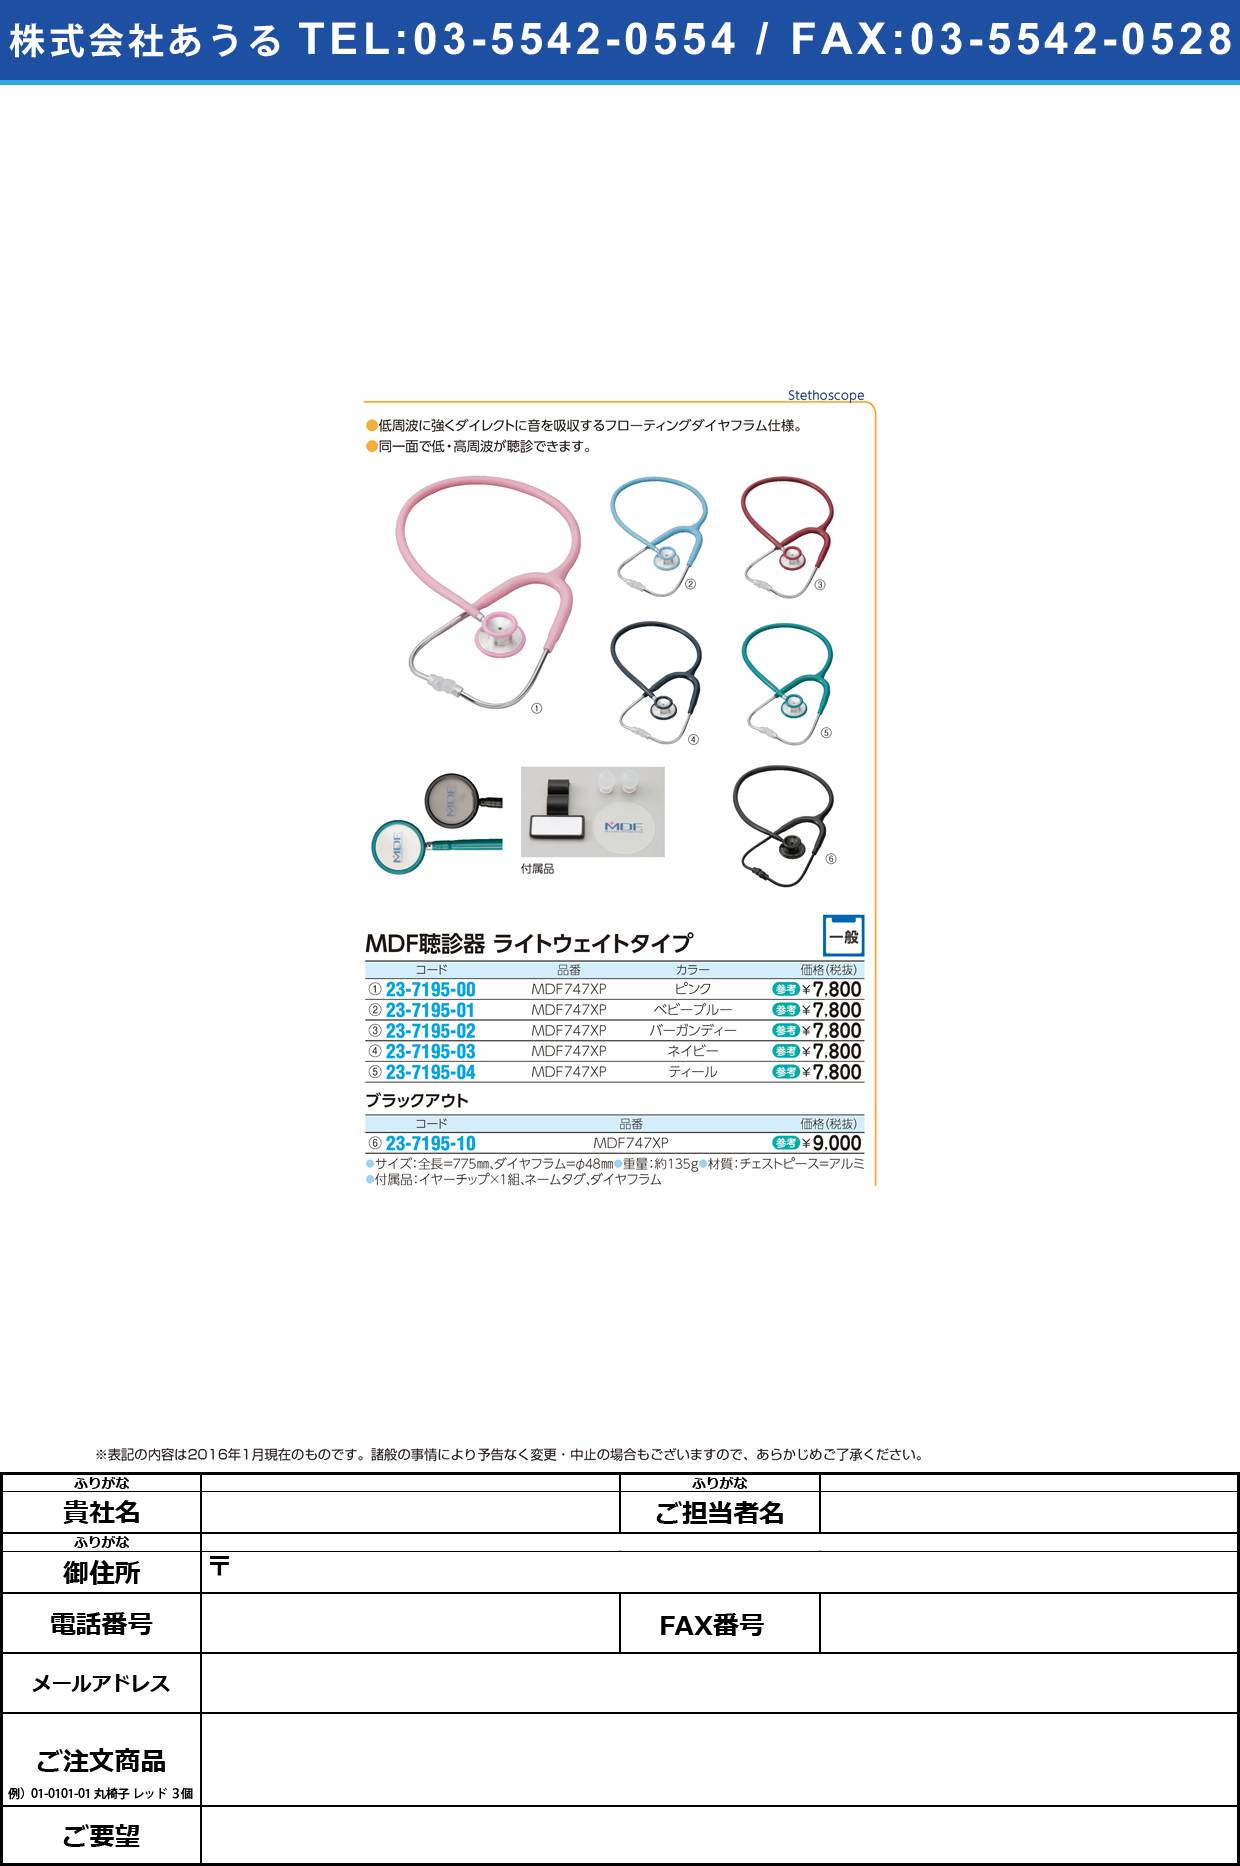 ＭＤＦ聴診器ライトウェイトタイプ MDFﾁｮｳｼﾝｷﾗｲﾄｳｪｲﾄﾀｲﾌﾟ MDF747XP(ﾊﾞｰｶﾞﾝﾃﾞｨ)